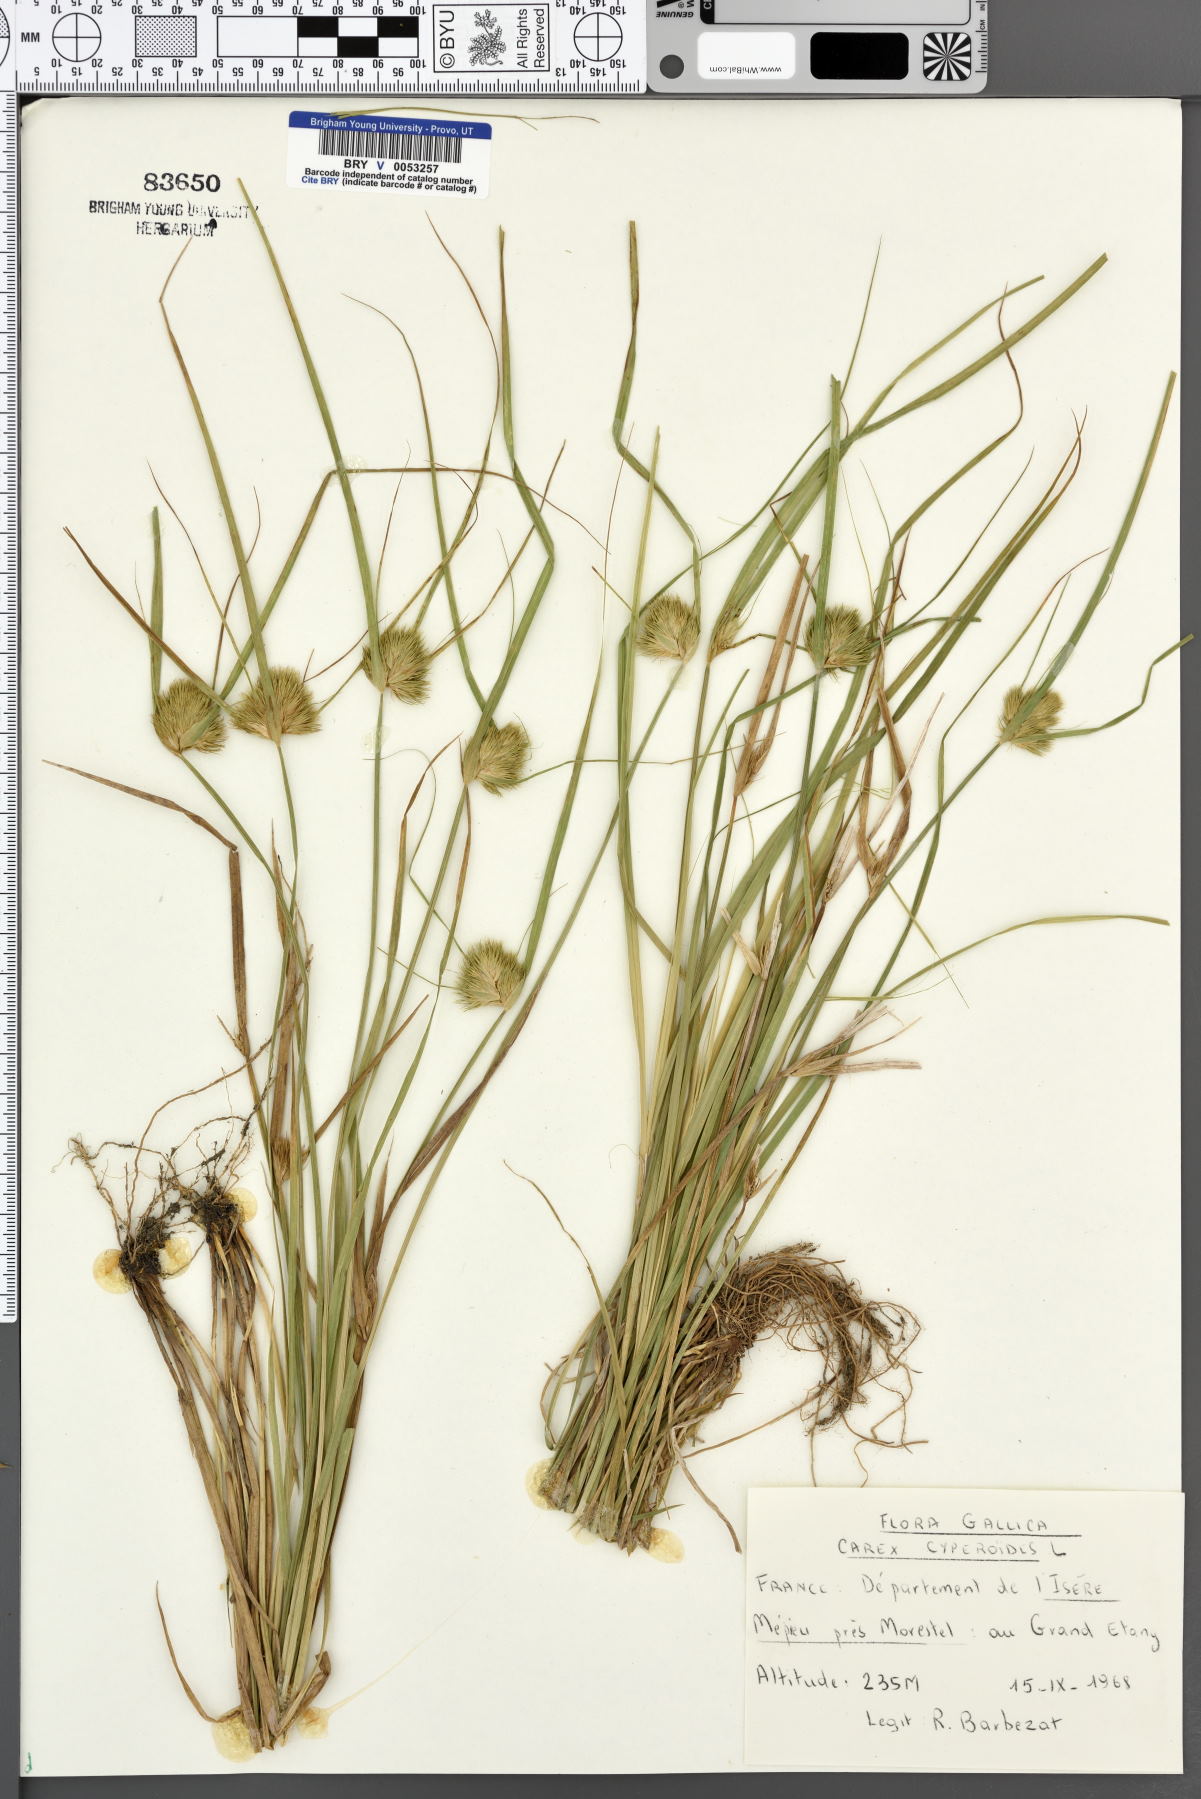 Carex bohemica image